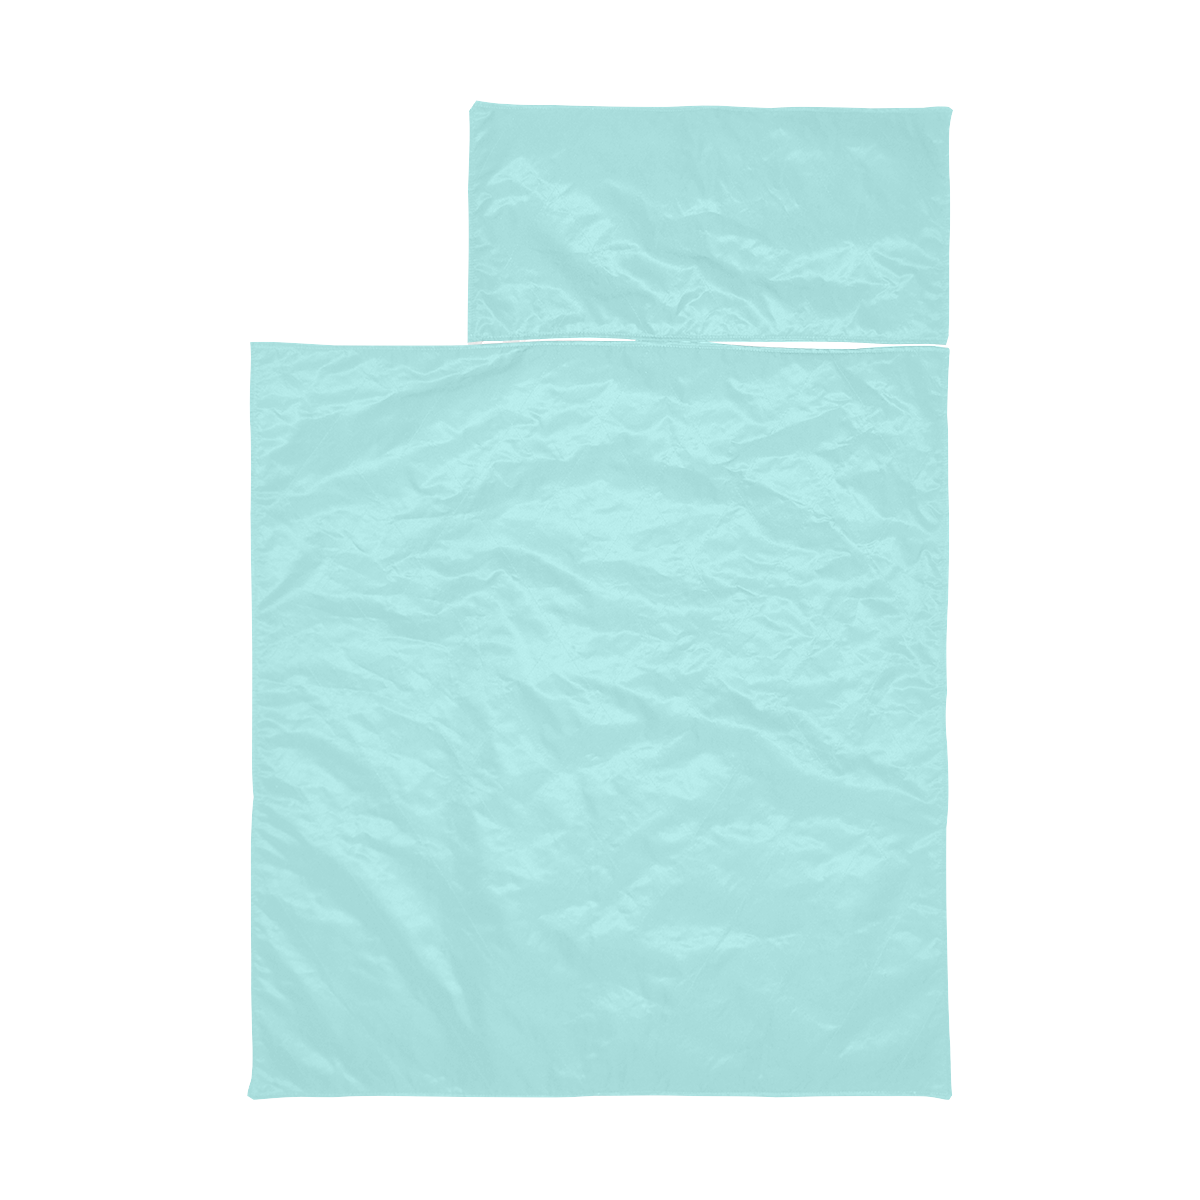 color pale turquoise Kids' Sleeping Bag